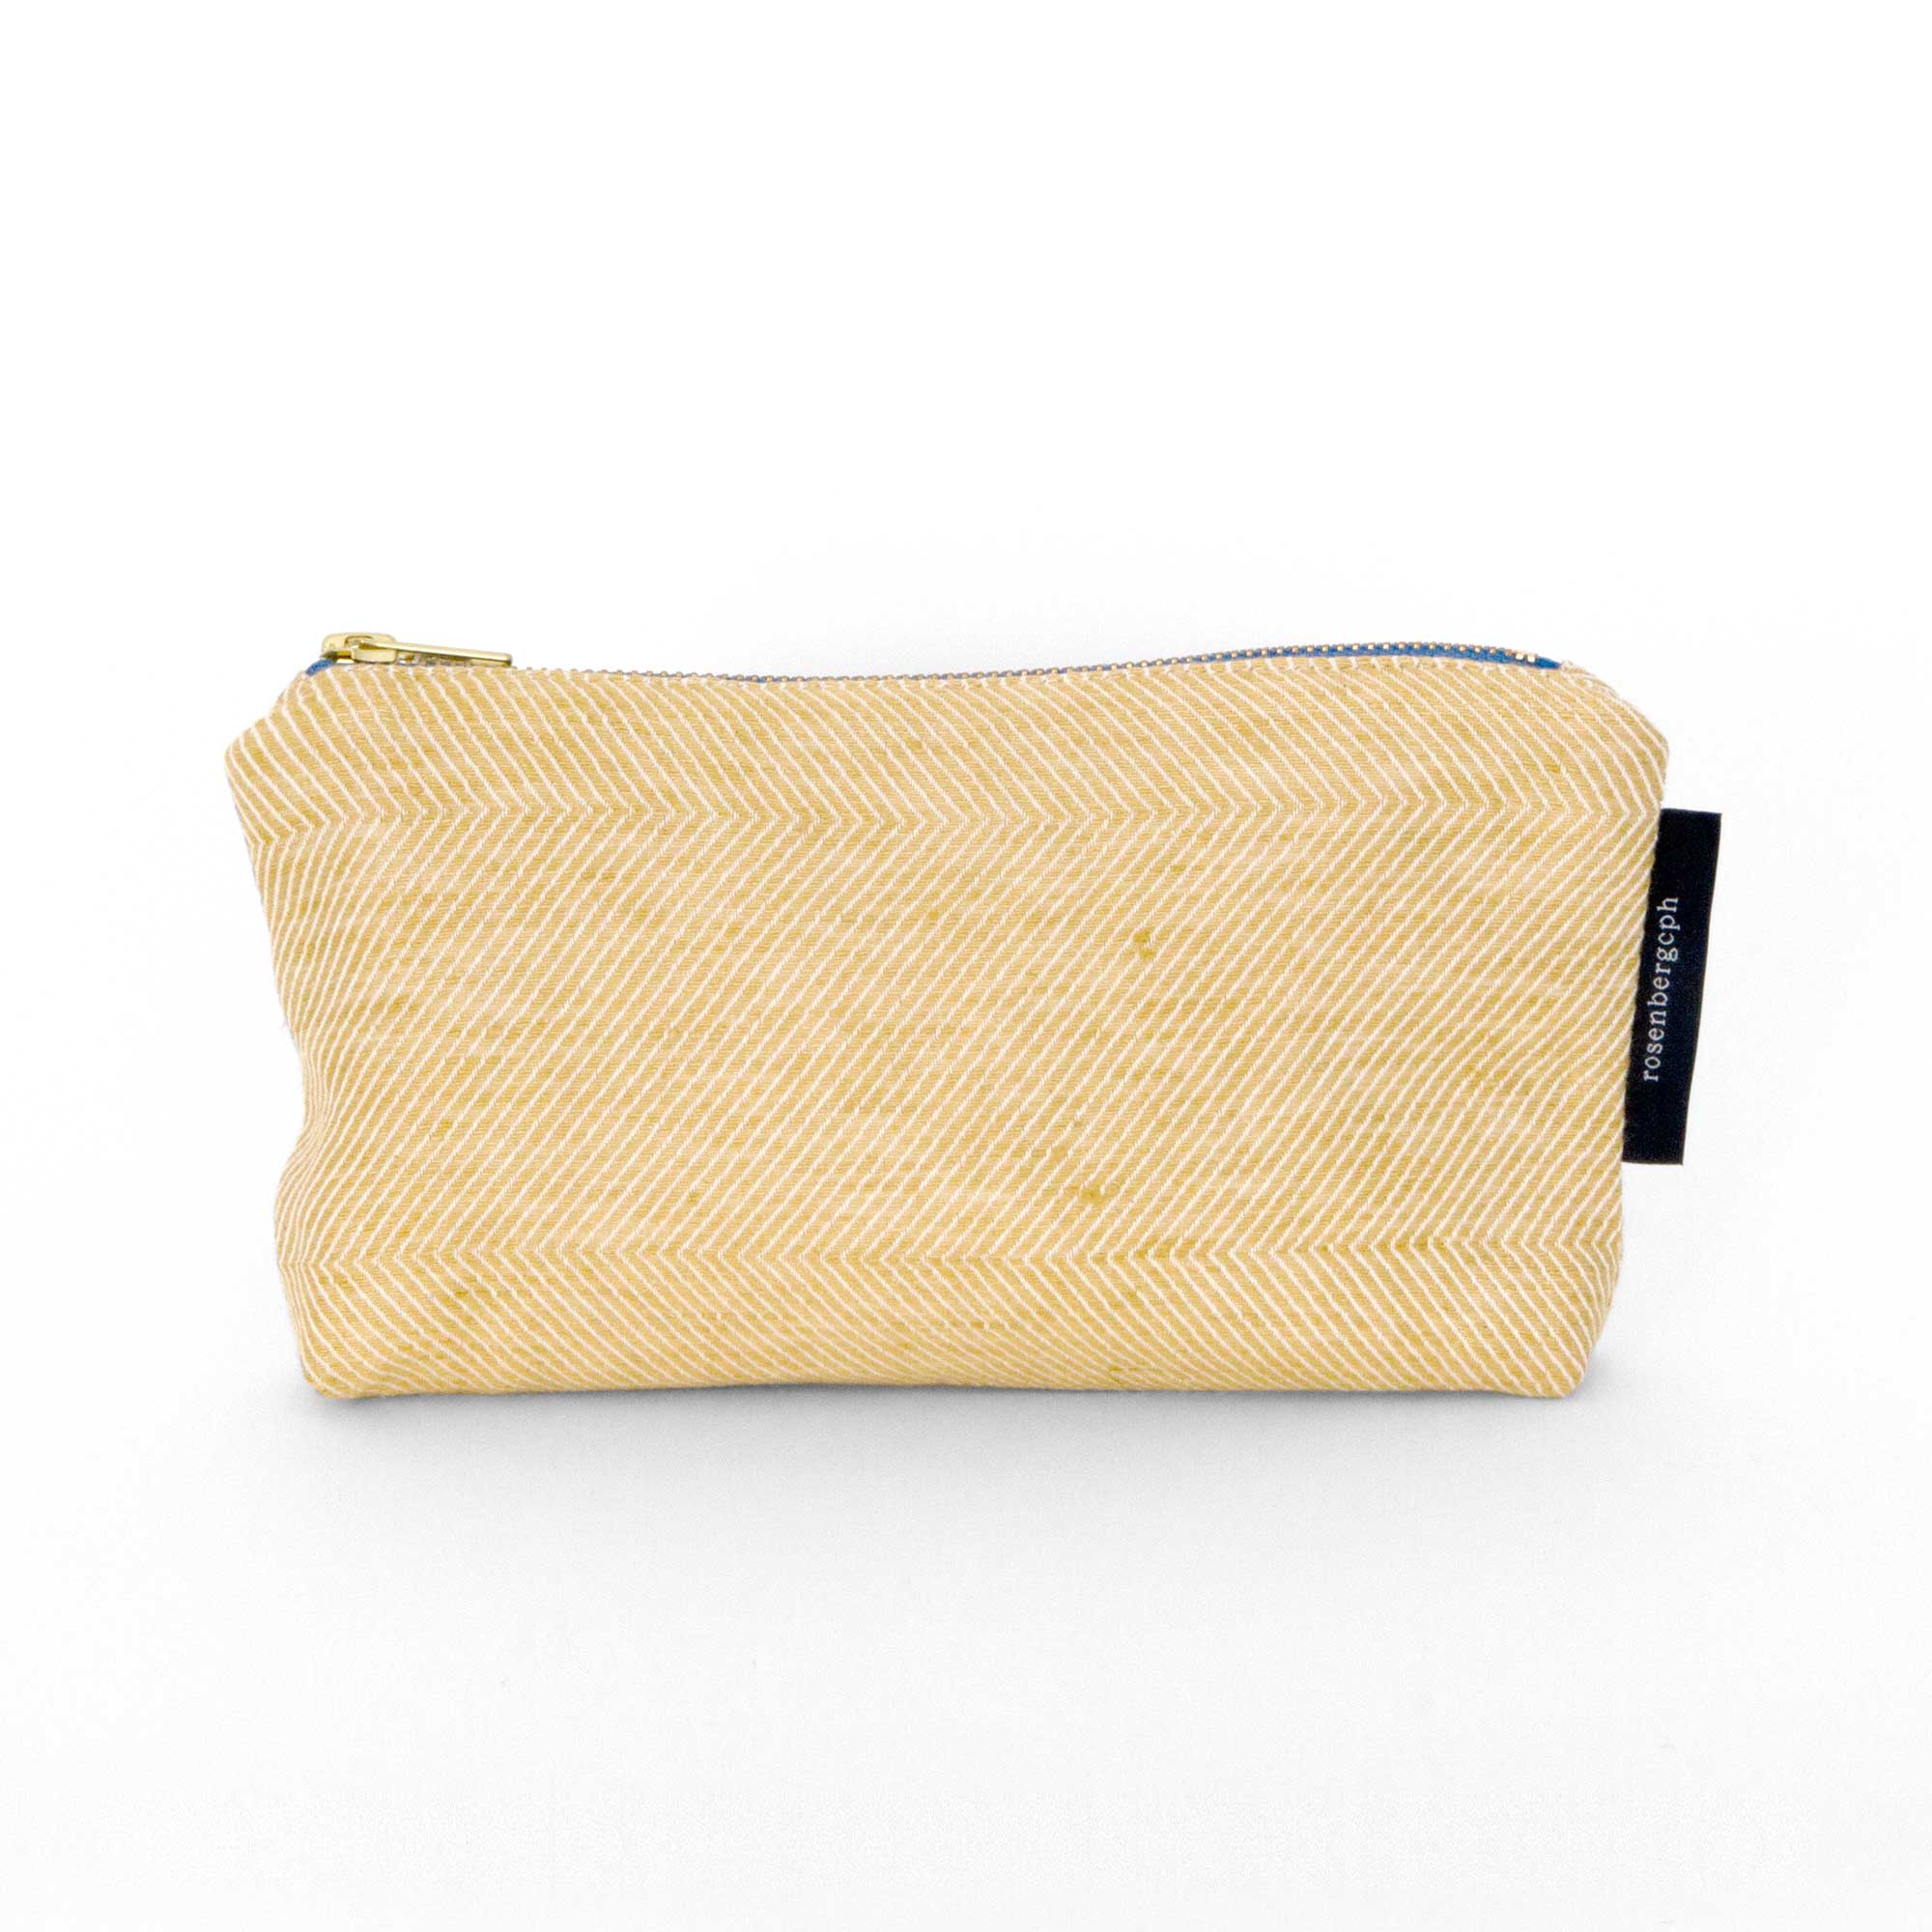 Shift linen/cotton purse, hay yellow, design Anne Rosenberg, RosenbergCph